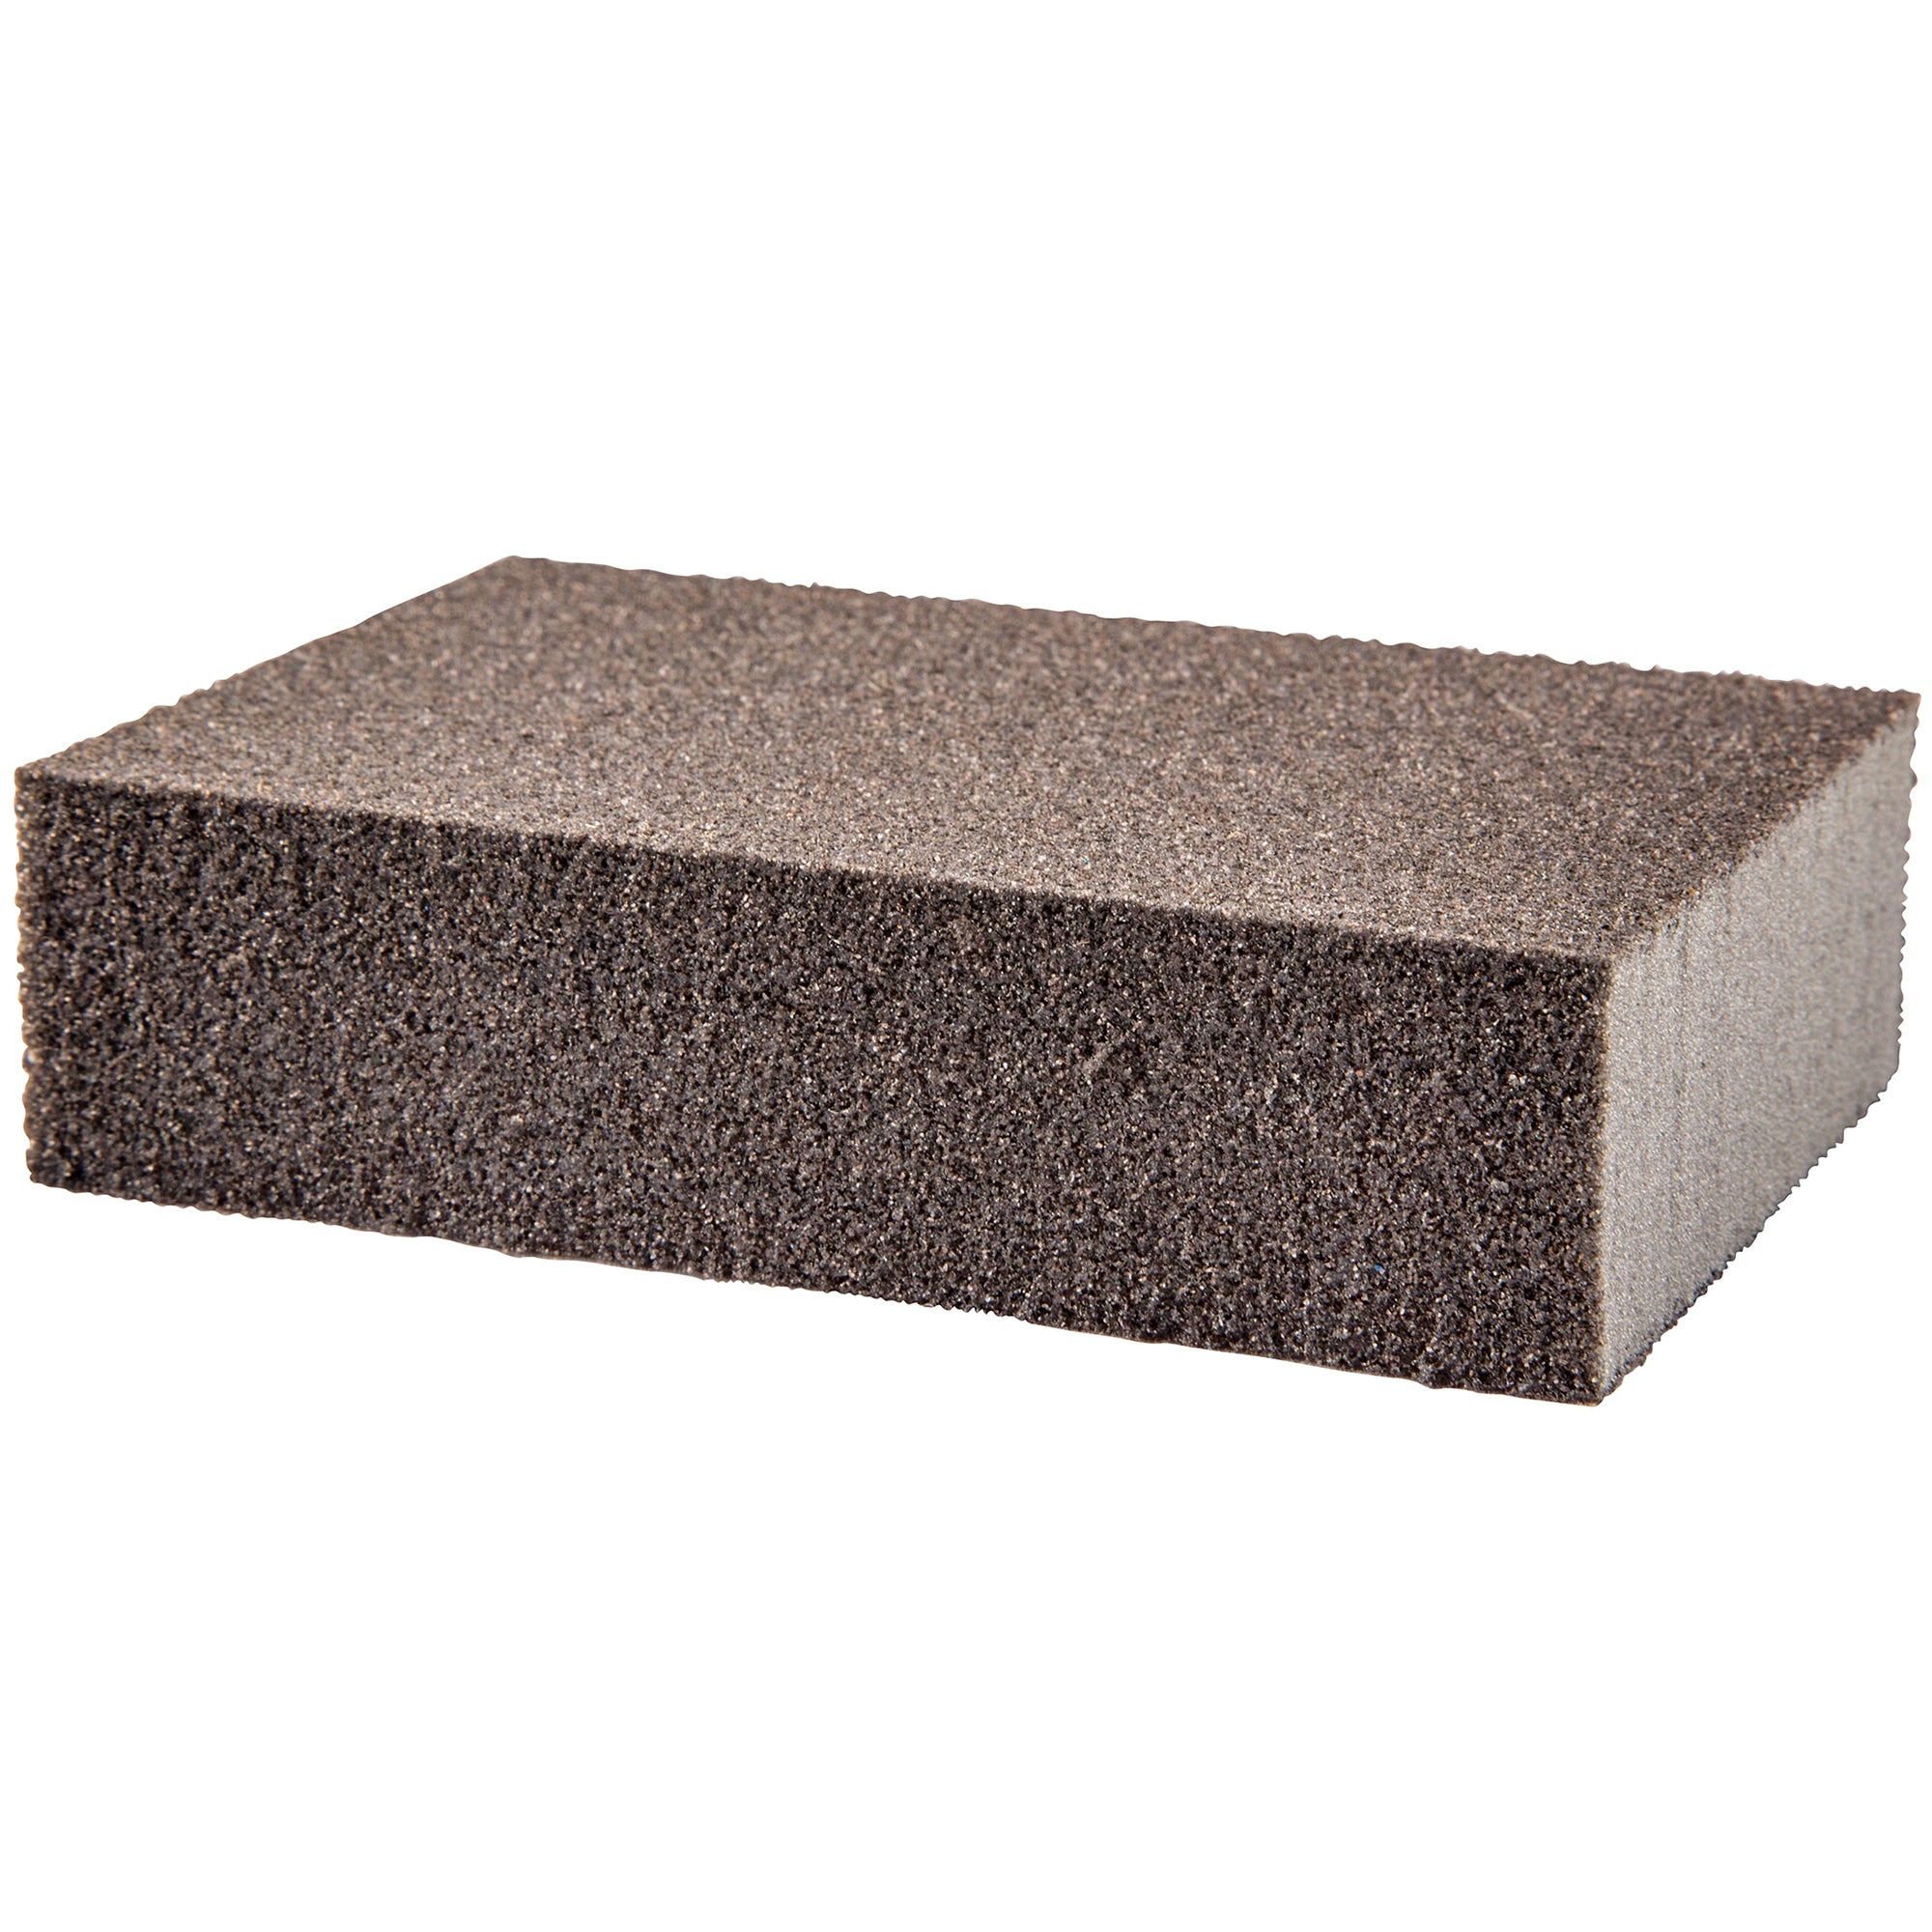 MultiSand Fine/Medium Grit Small Area Sanding Sponge